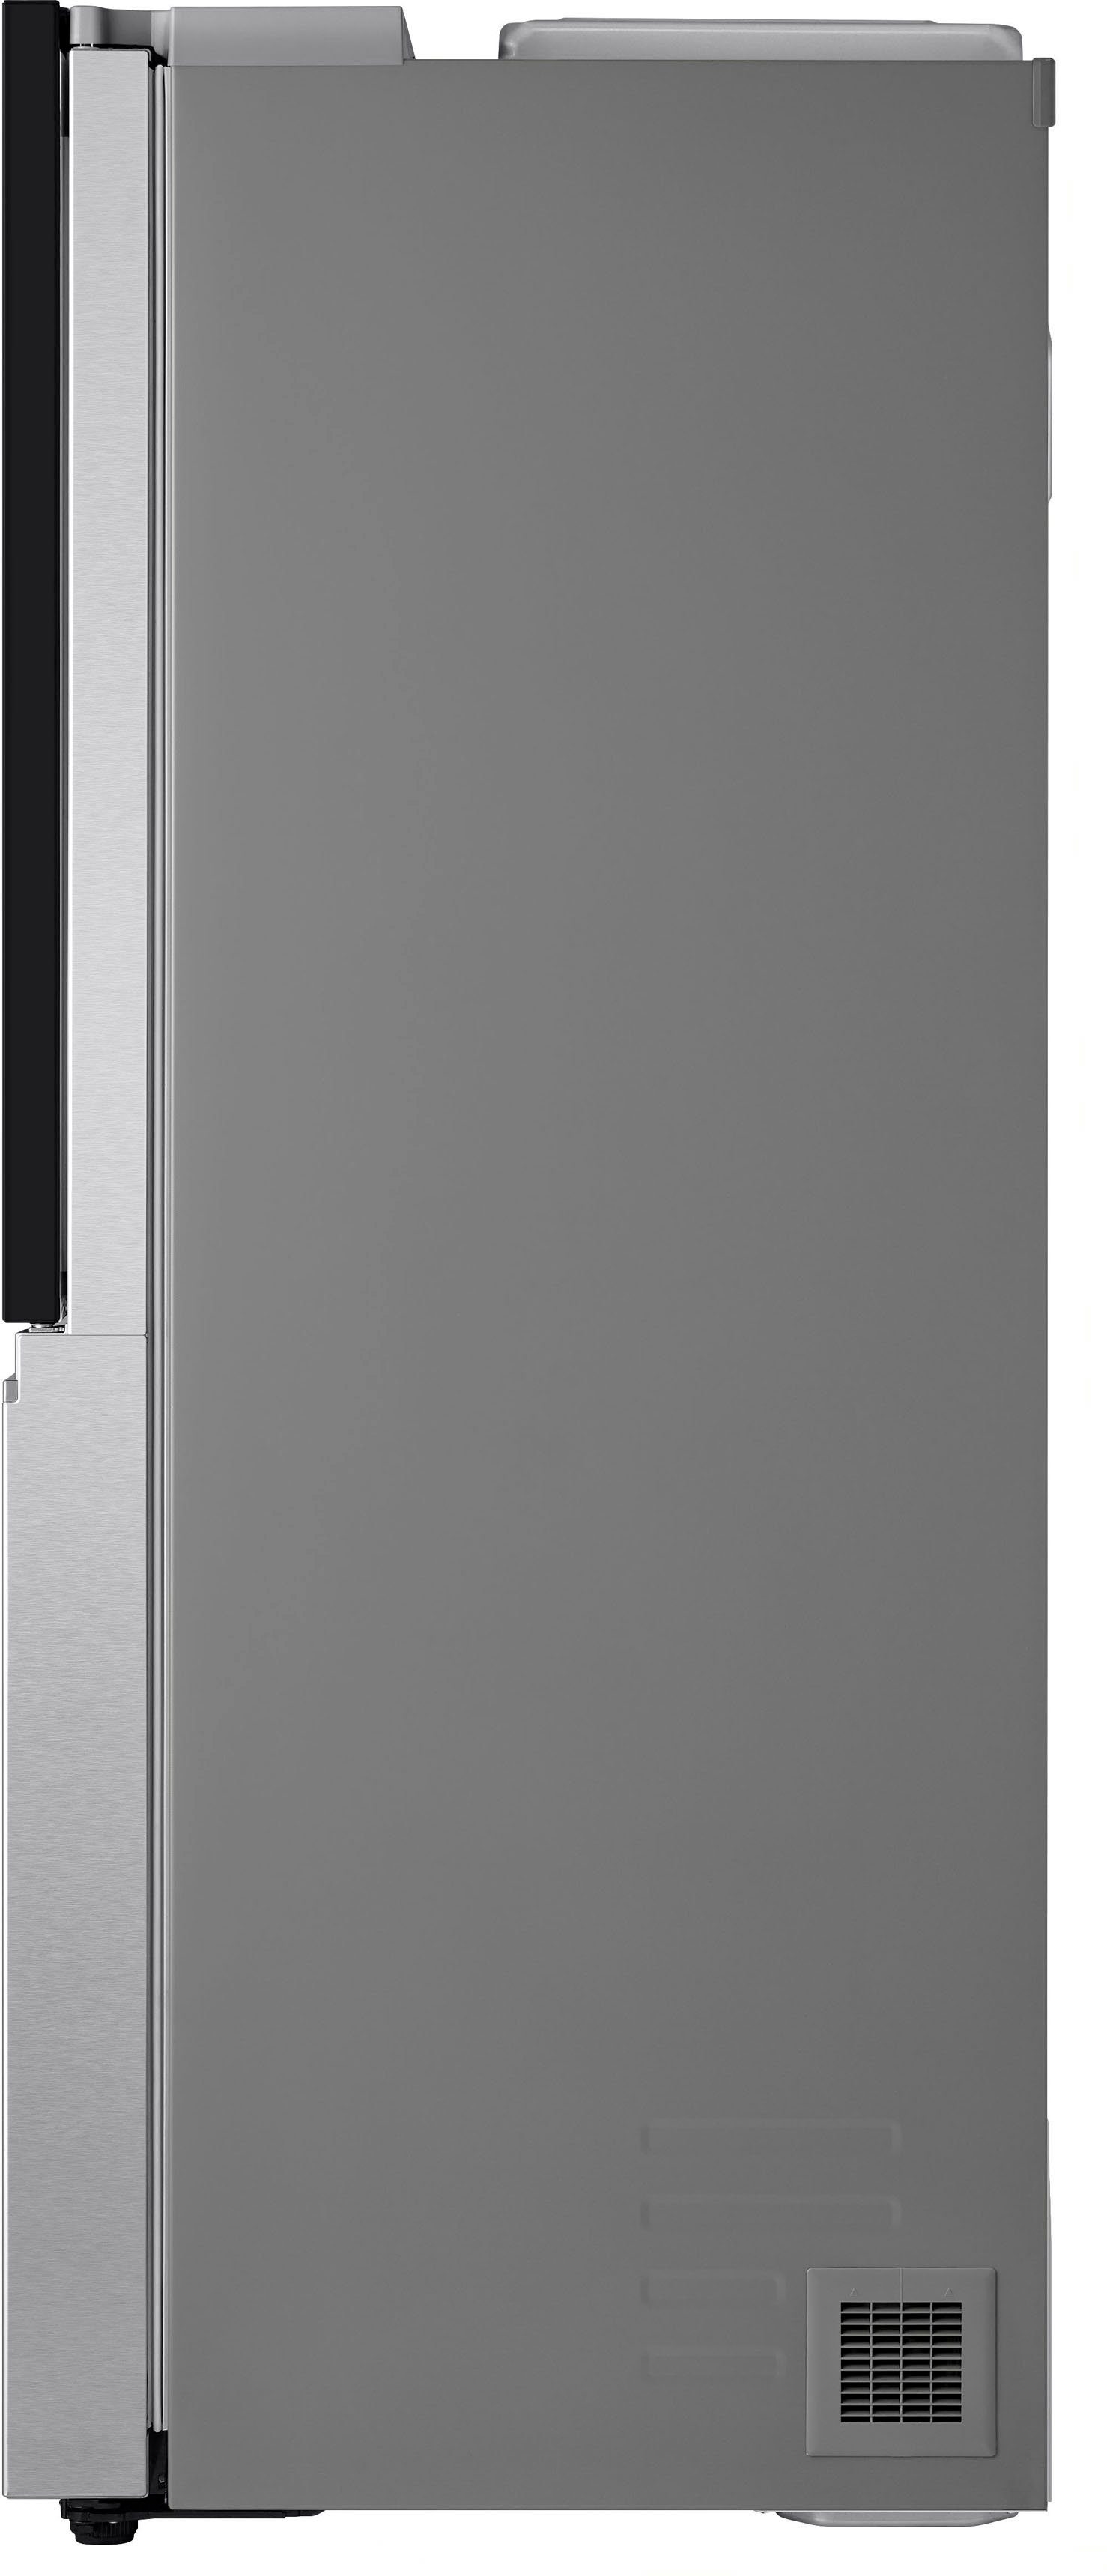 LG Side-by-Side GSXV91BSAF, cm cm InstaView™ hoch, 91,3 breit, 179 silberfarben